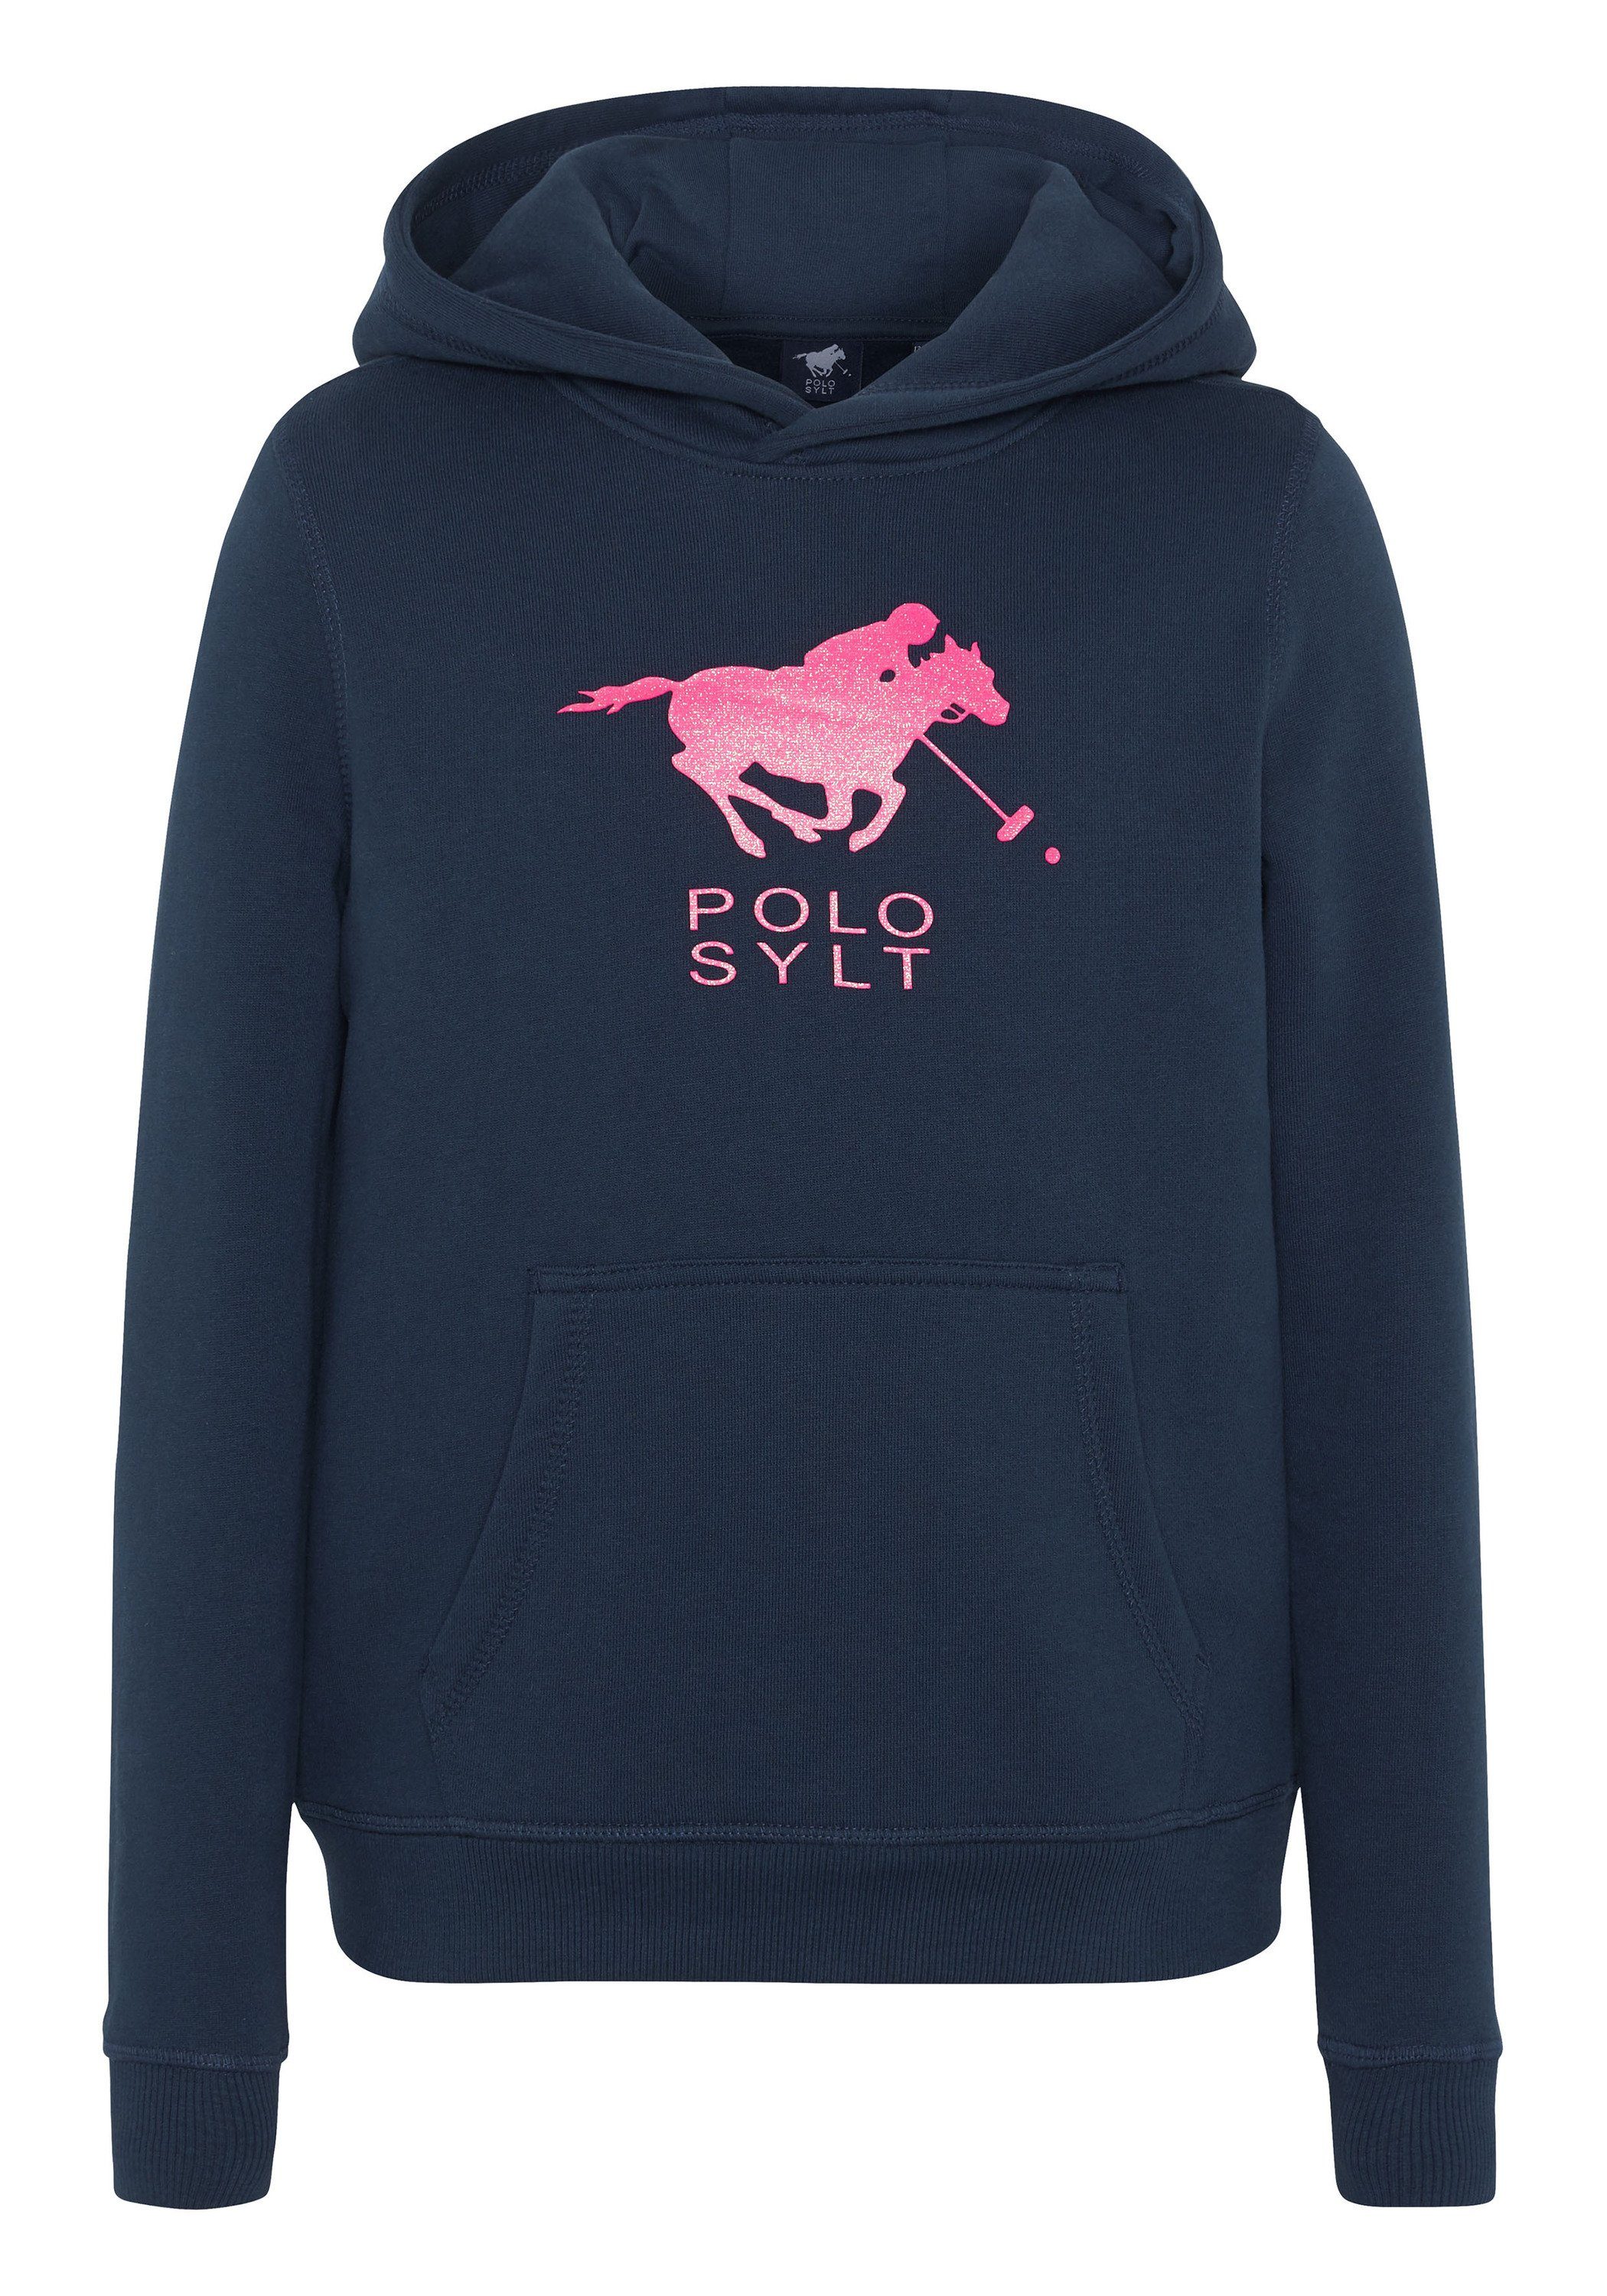 Polo Sylt Sweatshirt mit glitzerndem Label-Motiv Total Eclipse